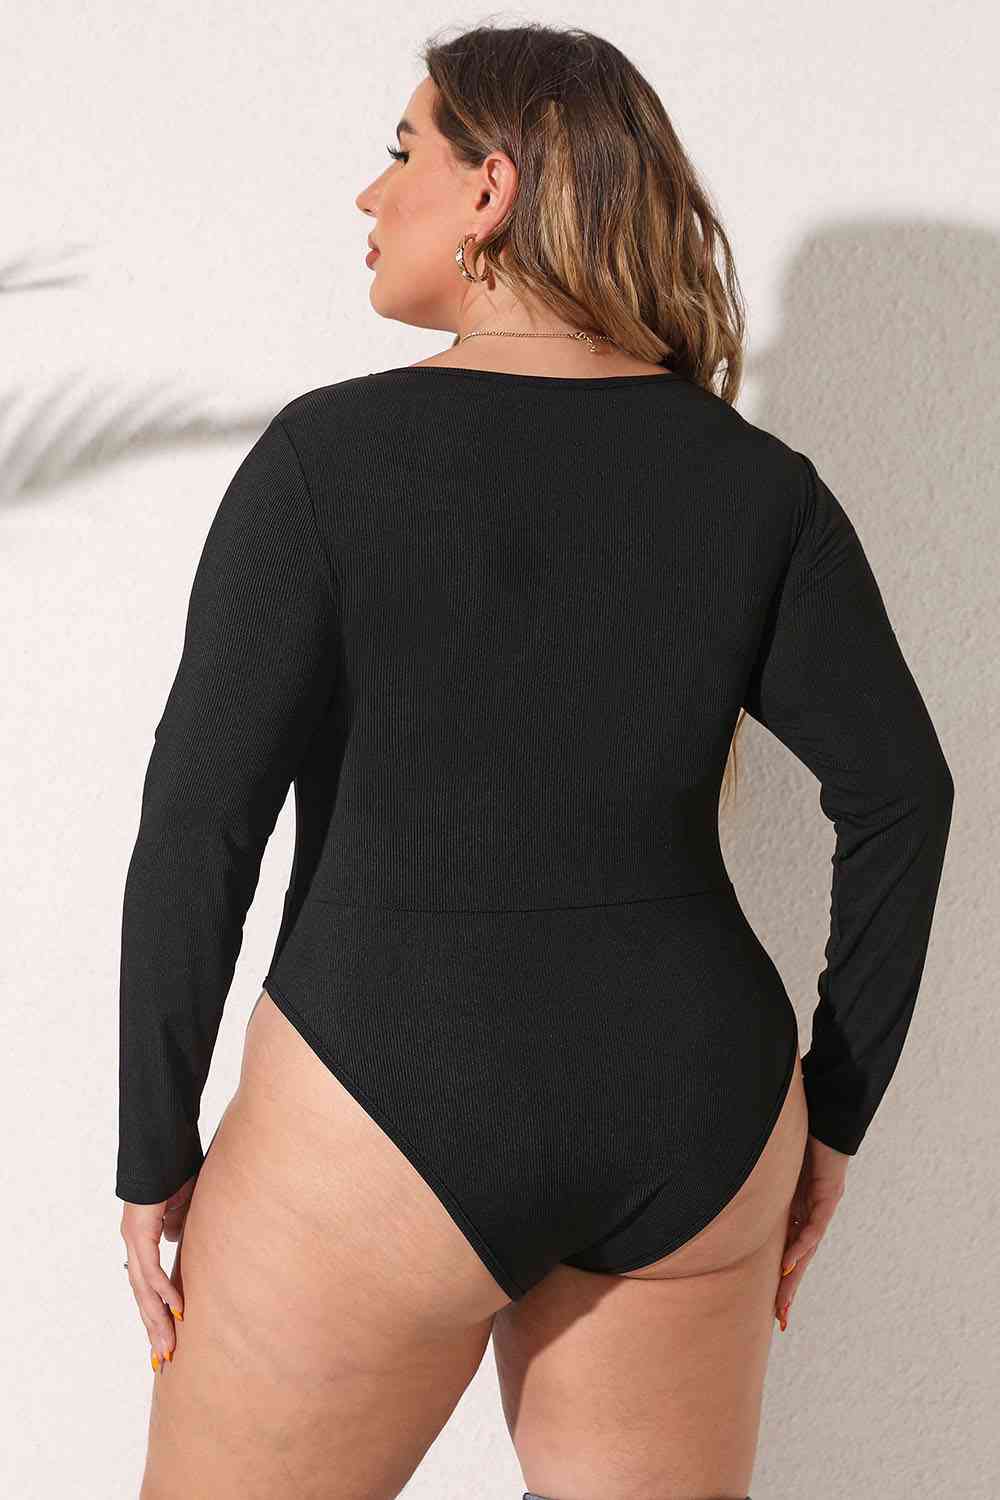 Classic Black Round Neck Long Sleeve Bodysuit (L - 4X)